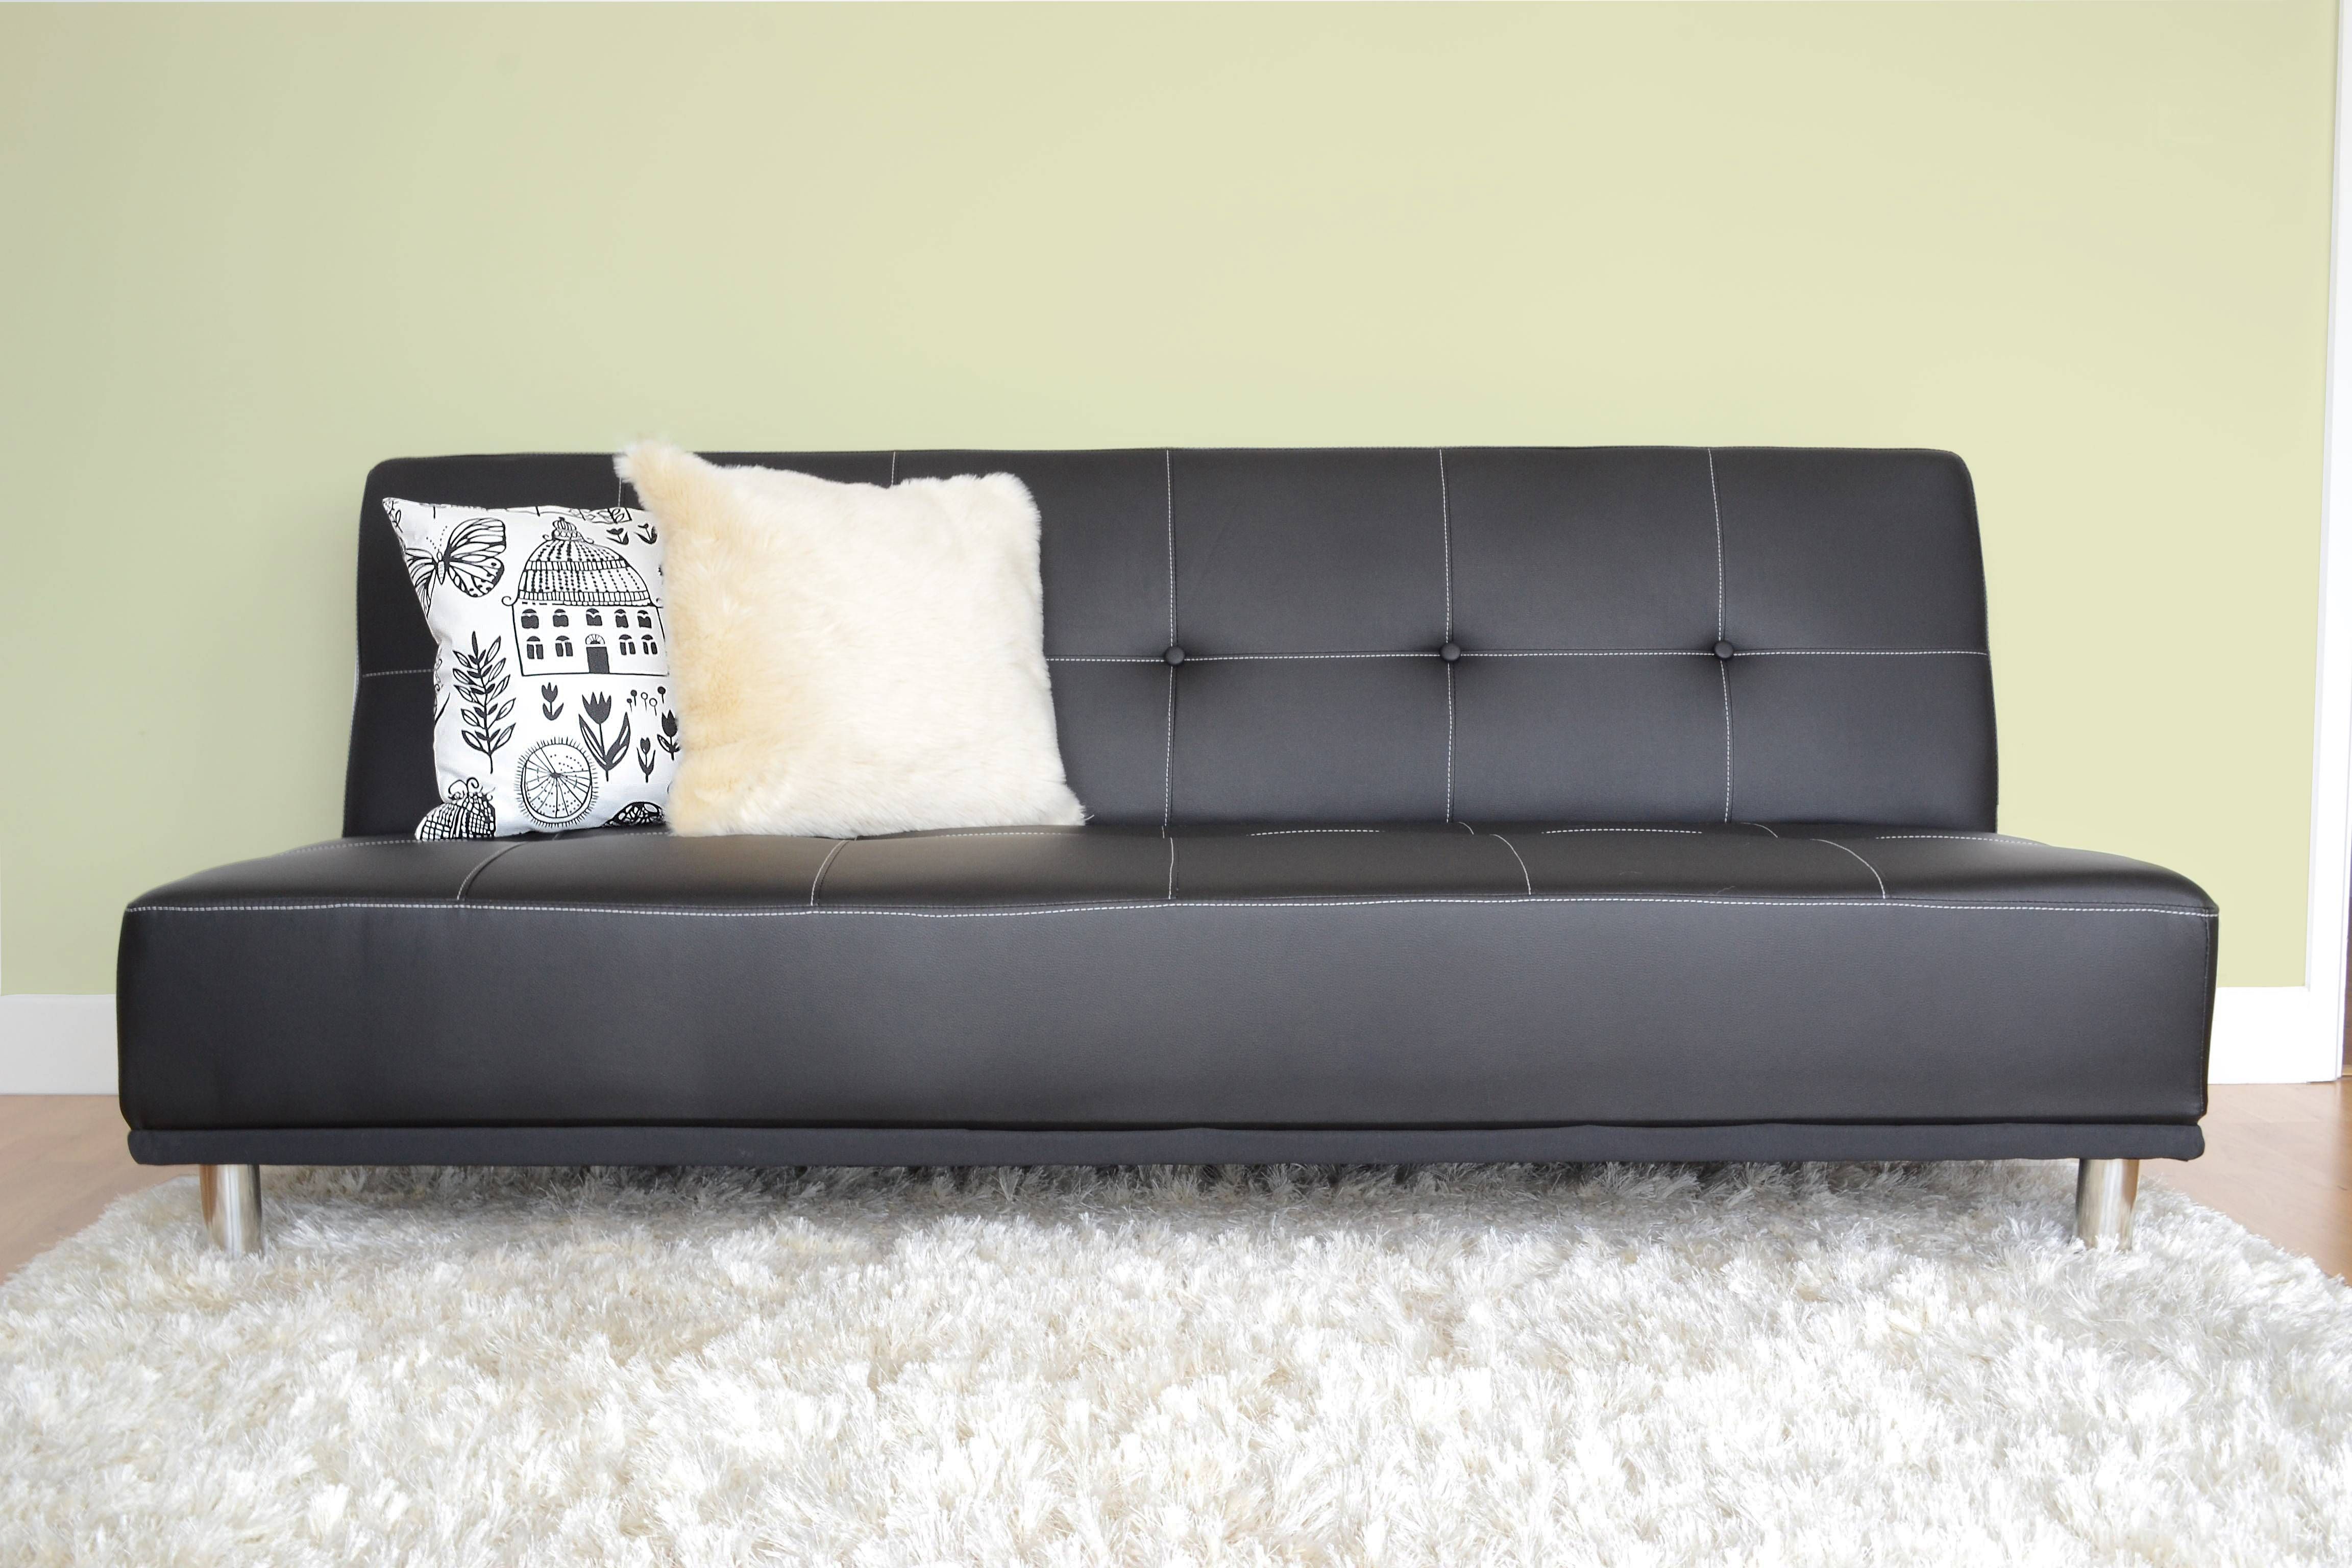 Furniture: Fabulous Faux Leather Futon For Living Room Decor Inside Faux Leather Futon Sofas (View 2 of 15)